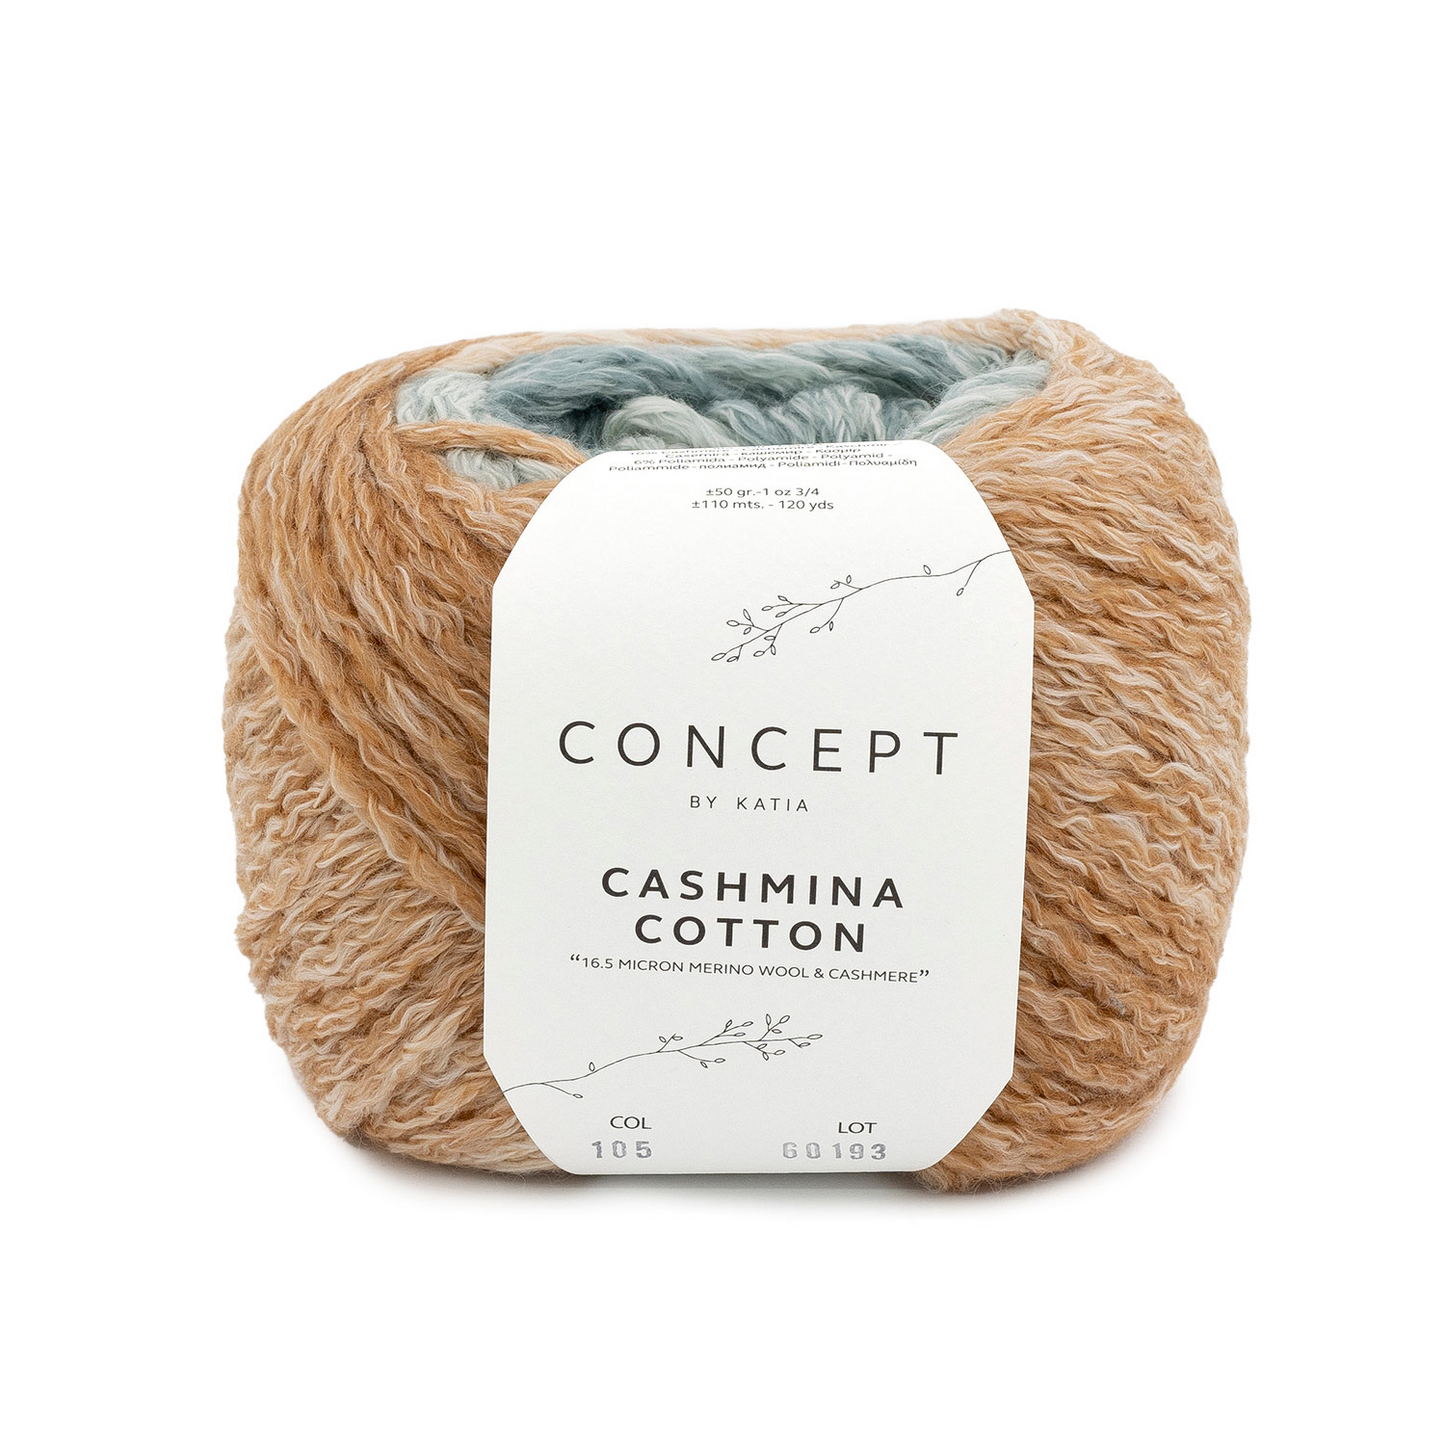 Cashmina Cotton Concept de Katia